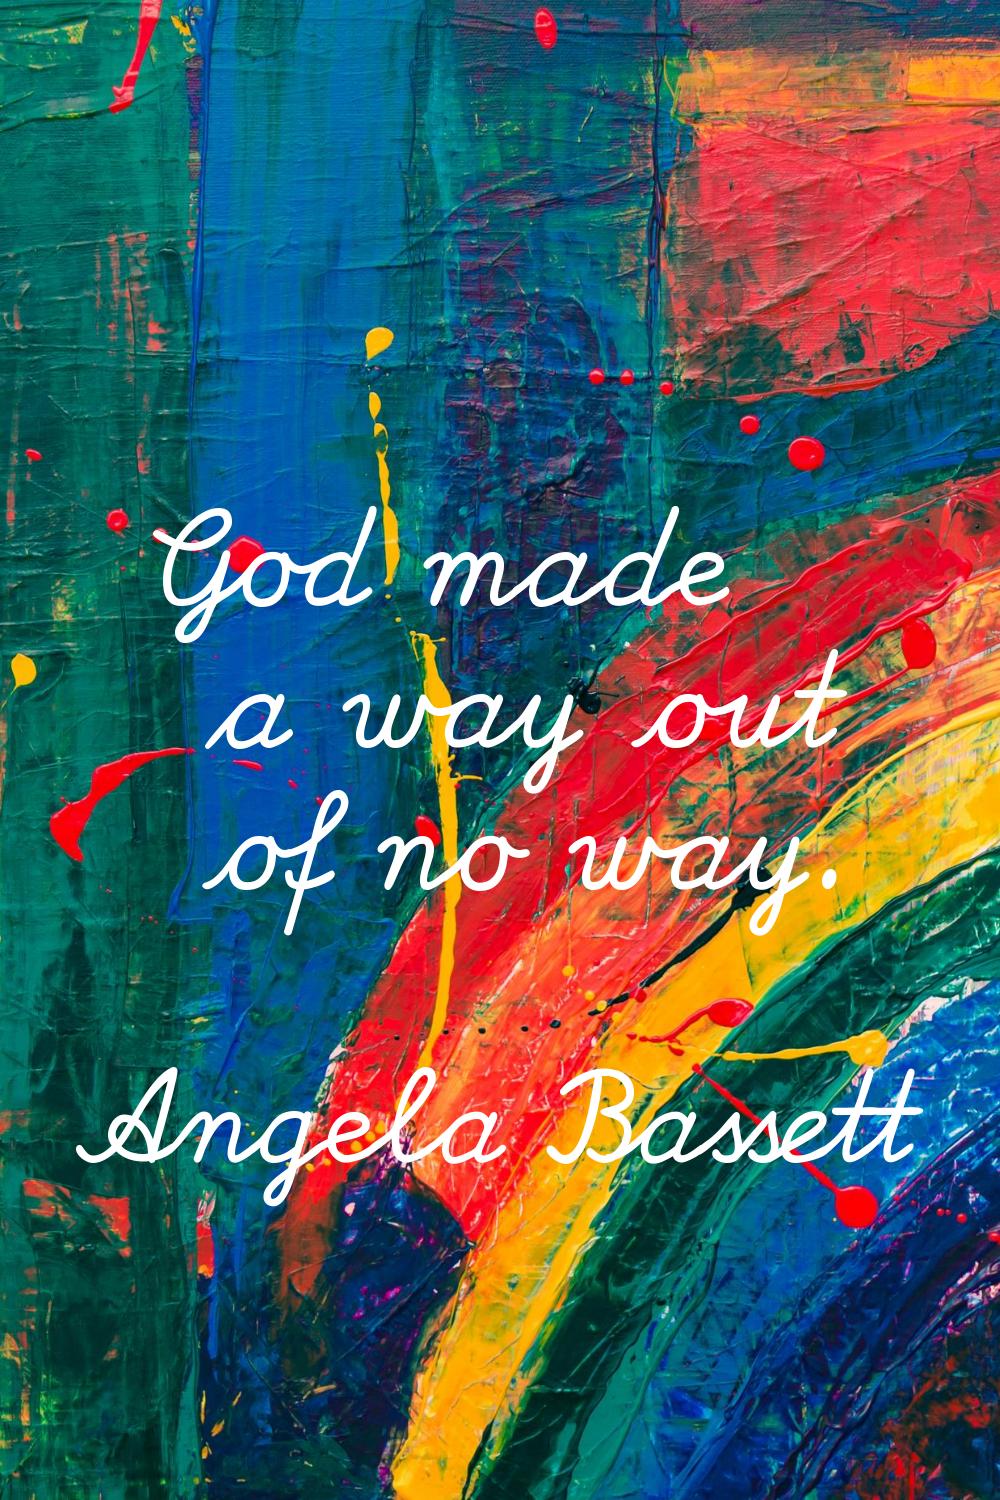 God made a way out of no way.